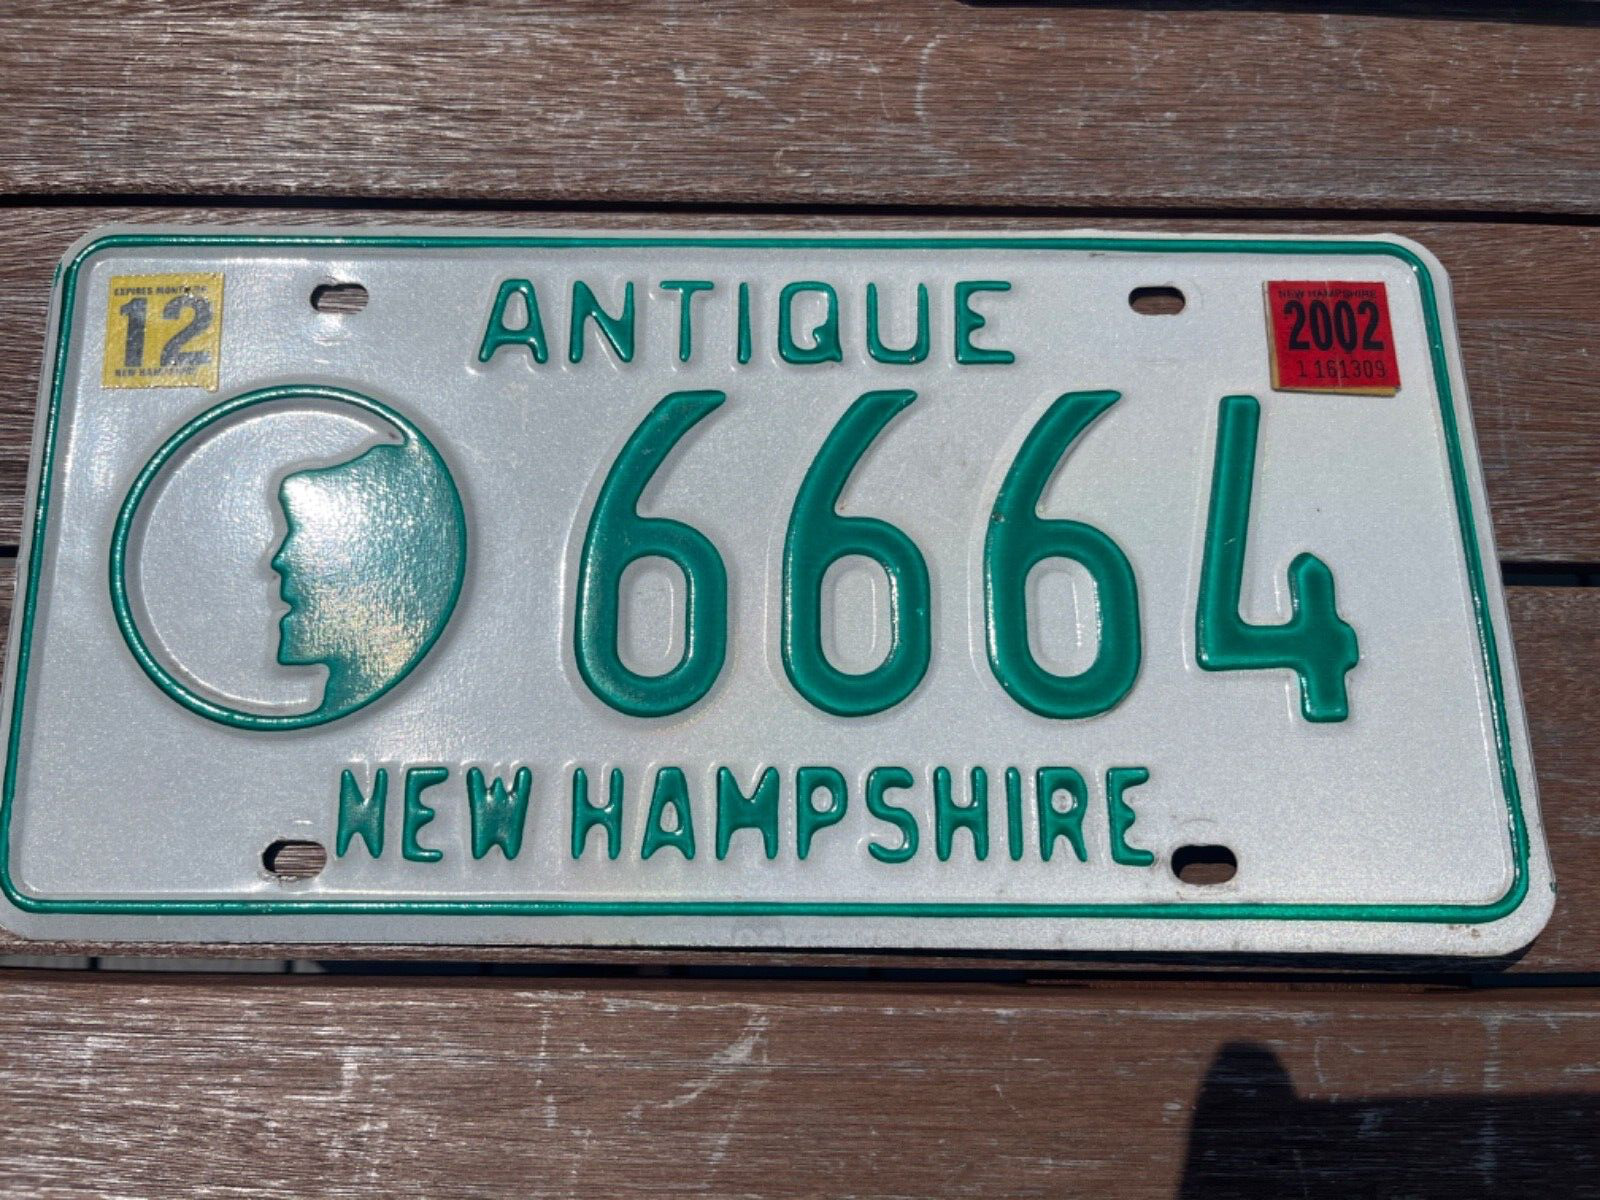 2002 New Hampshire Antique Car License Plate 6664